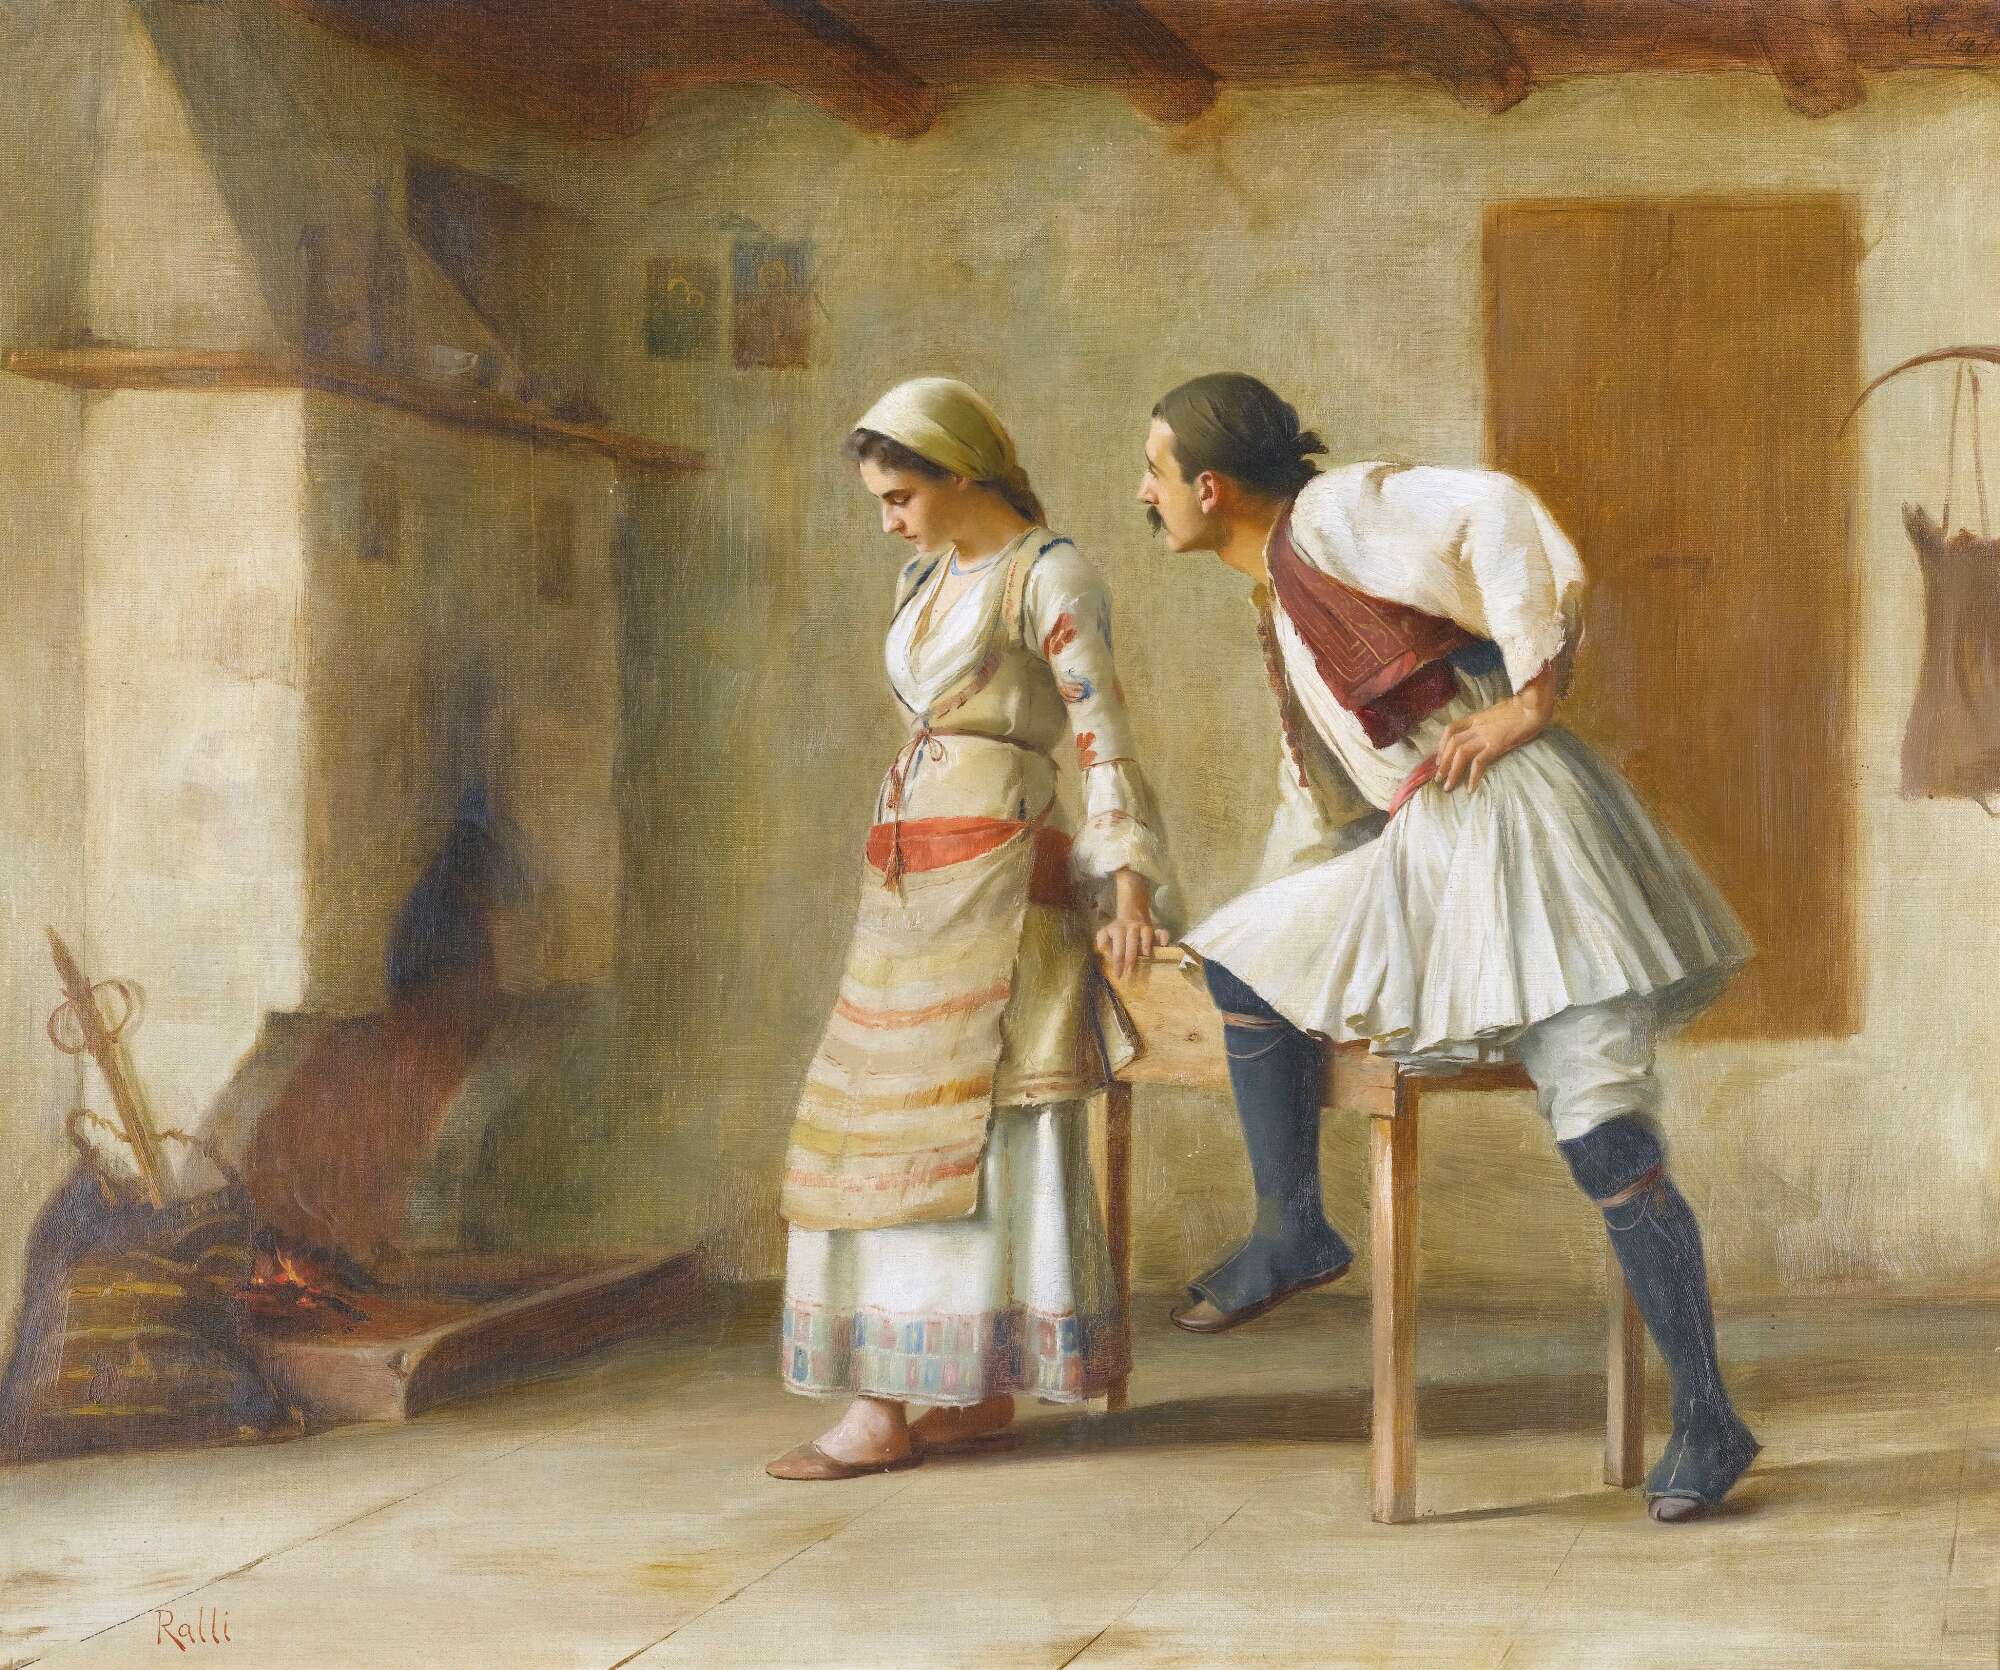 GREEK FLIRTATION, Theodoros Ralli, 1852-1909